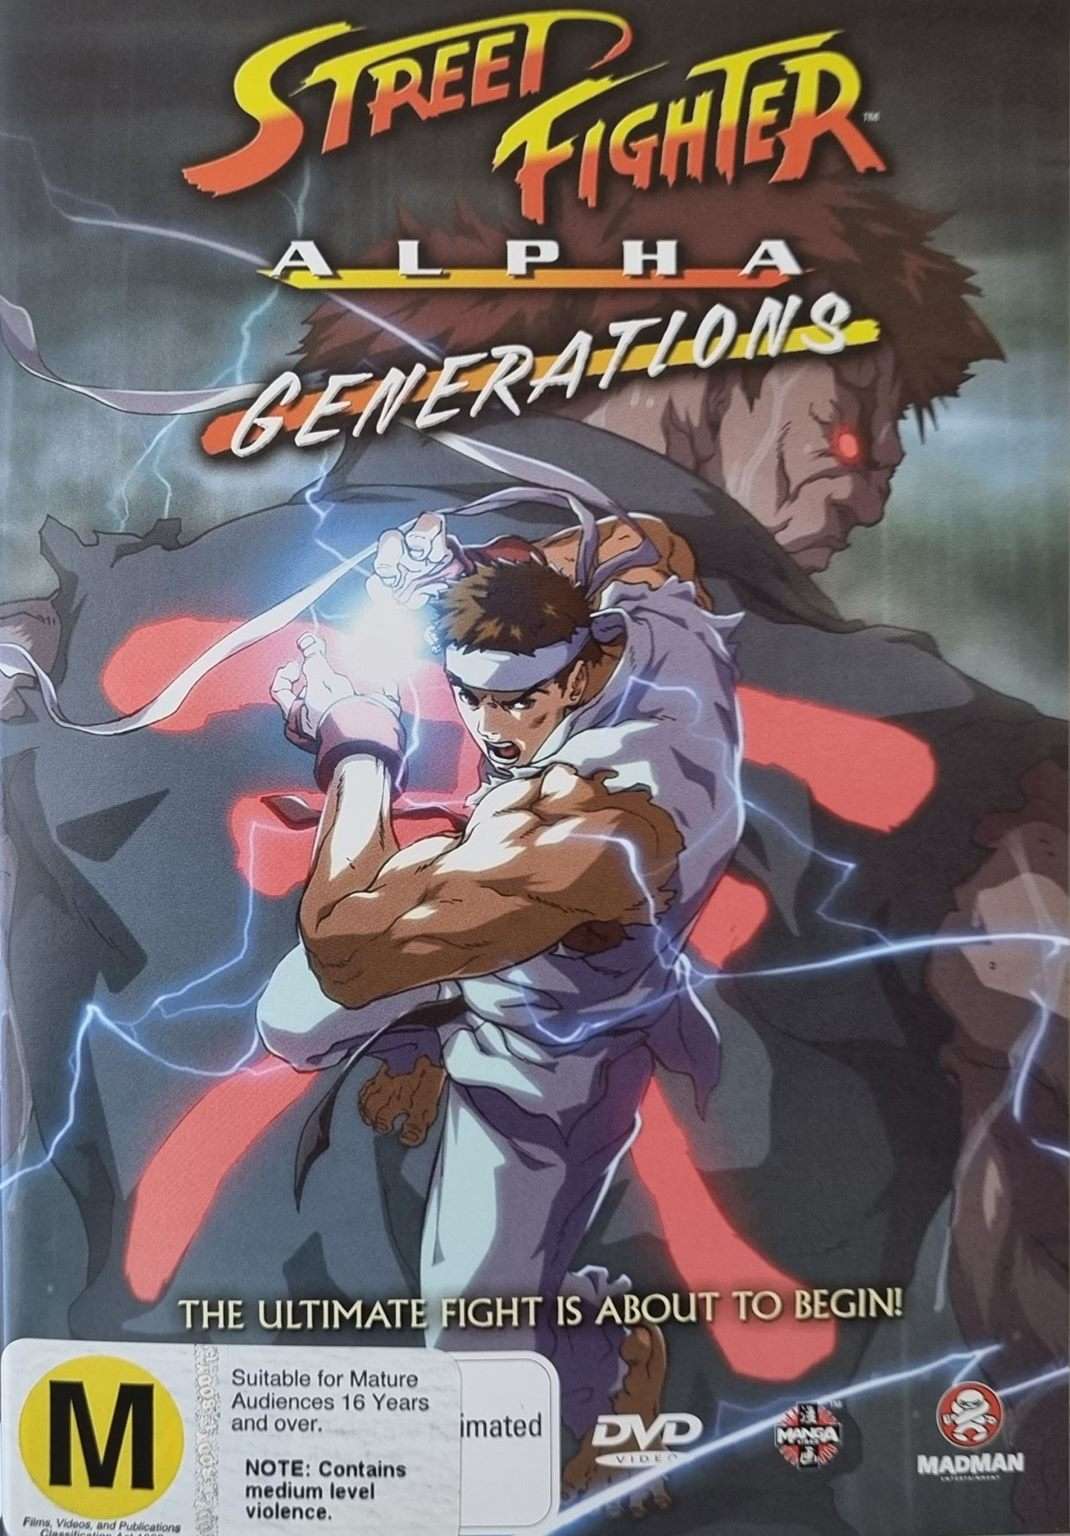 Street Fighter Alpha: Generations